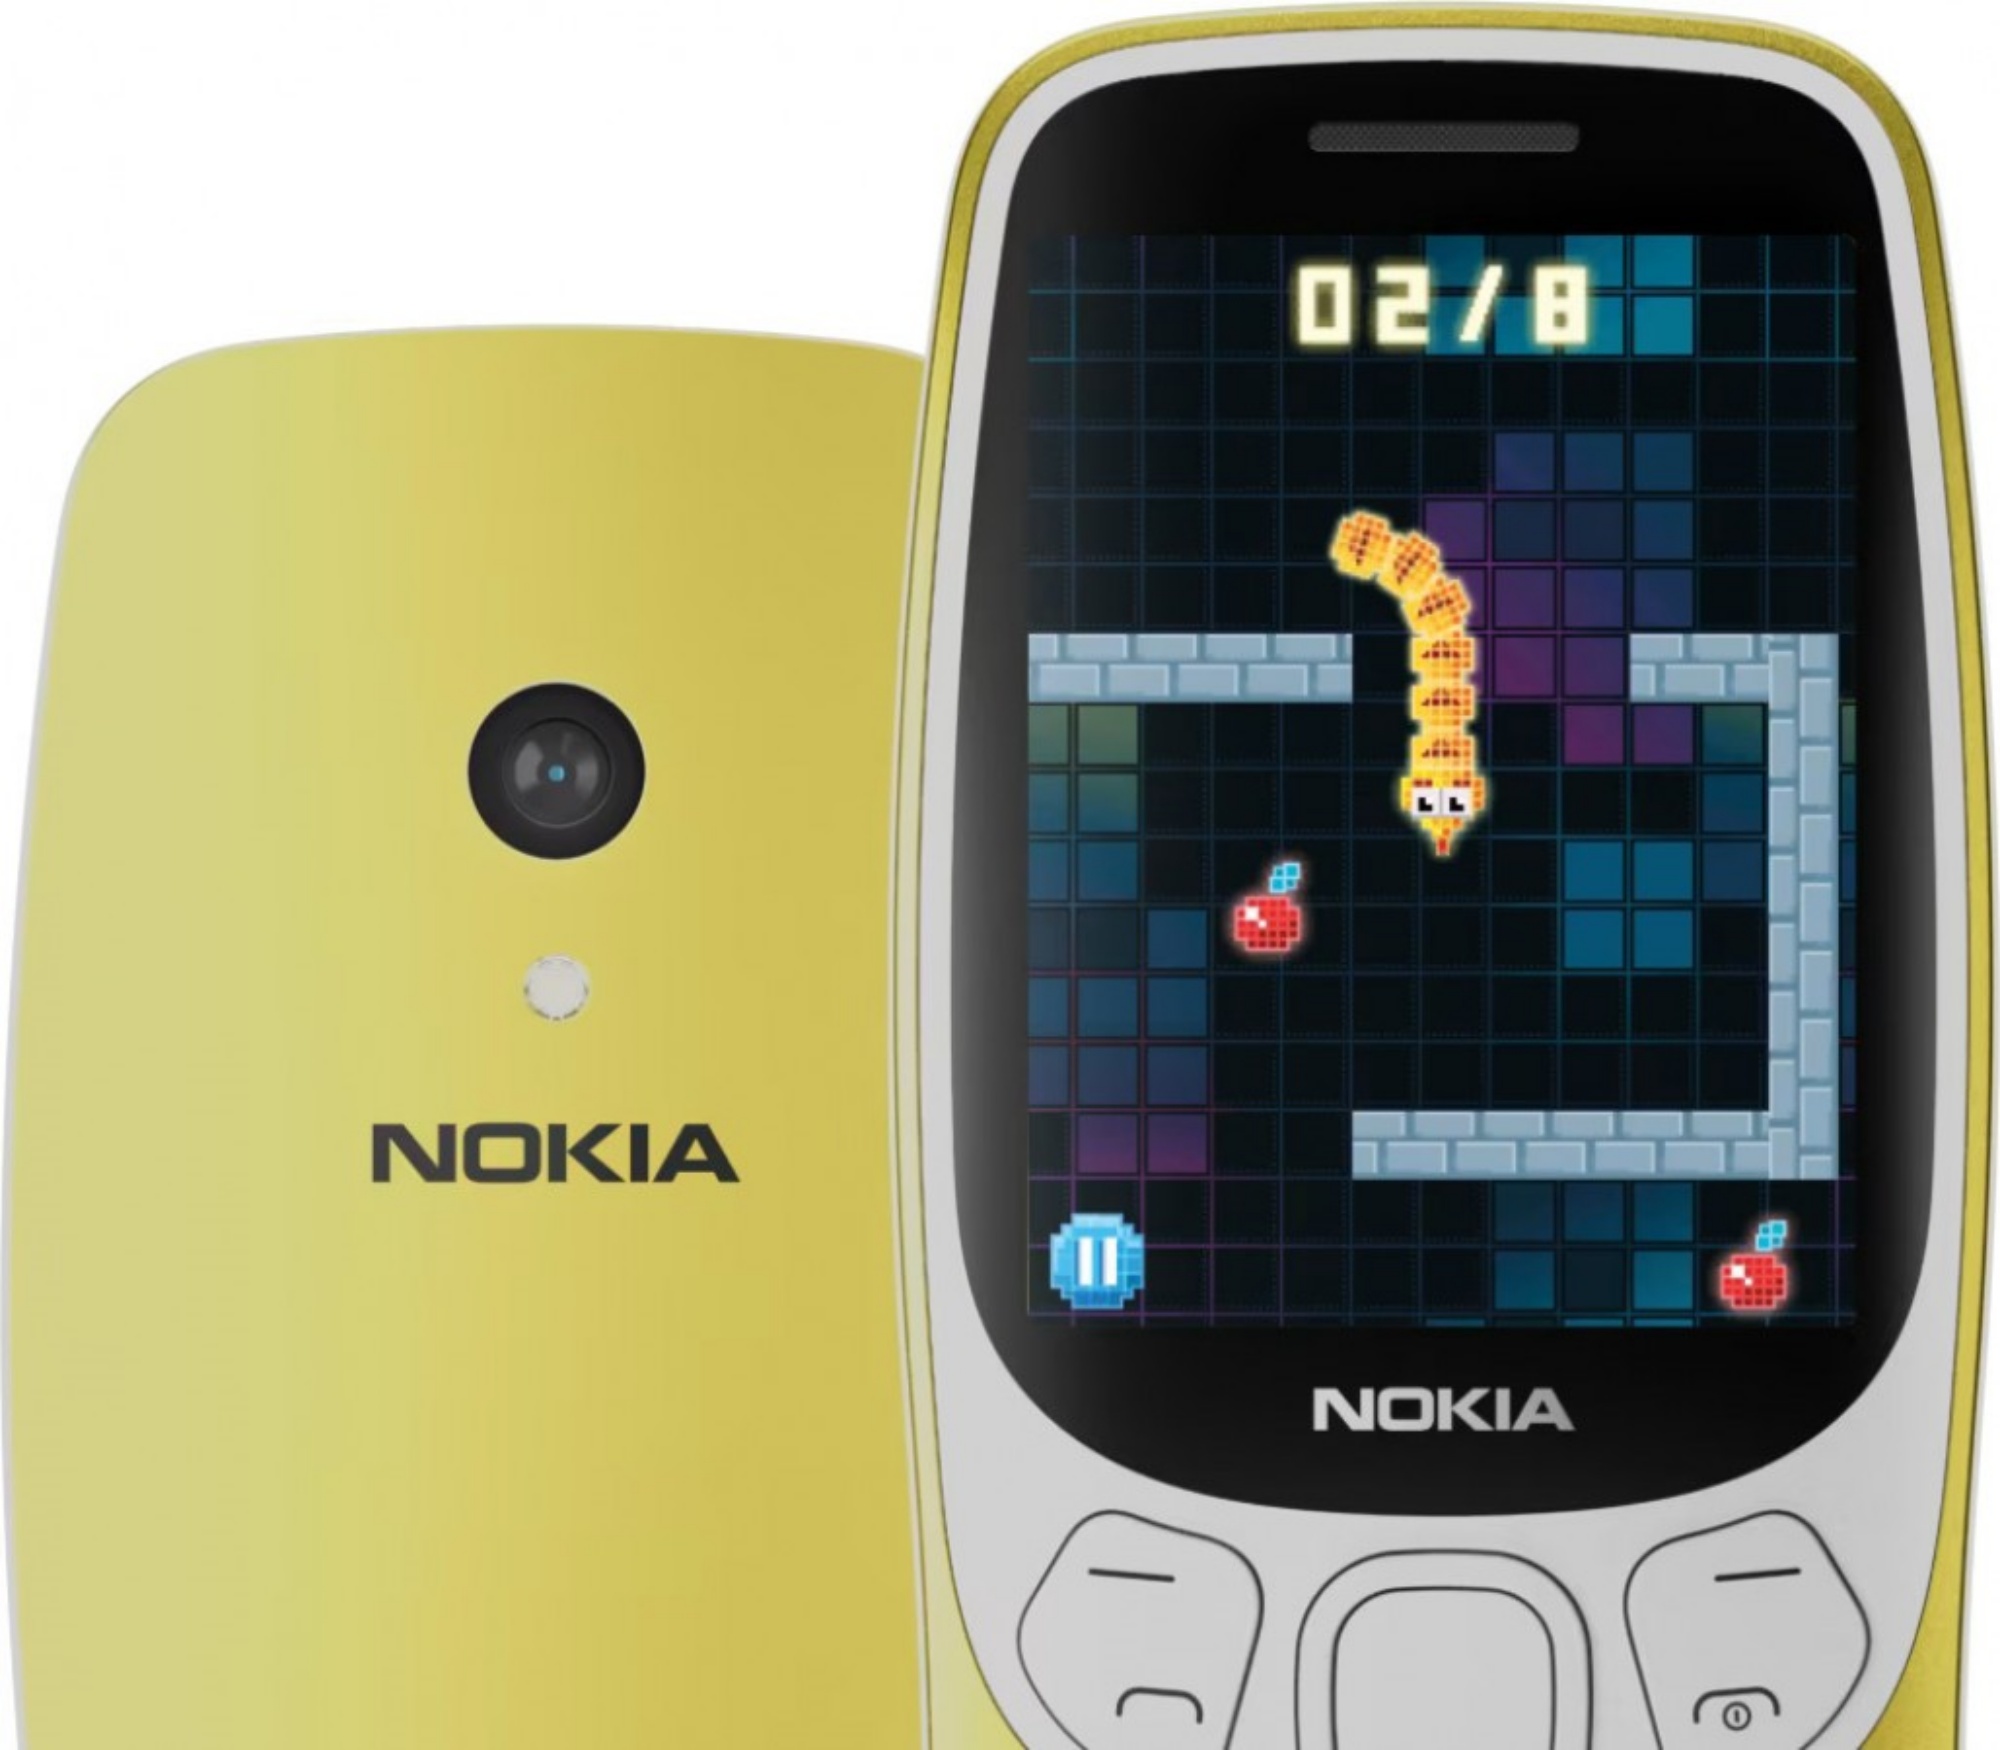 hmd_HMD Nokia 3210 4G announced